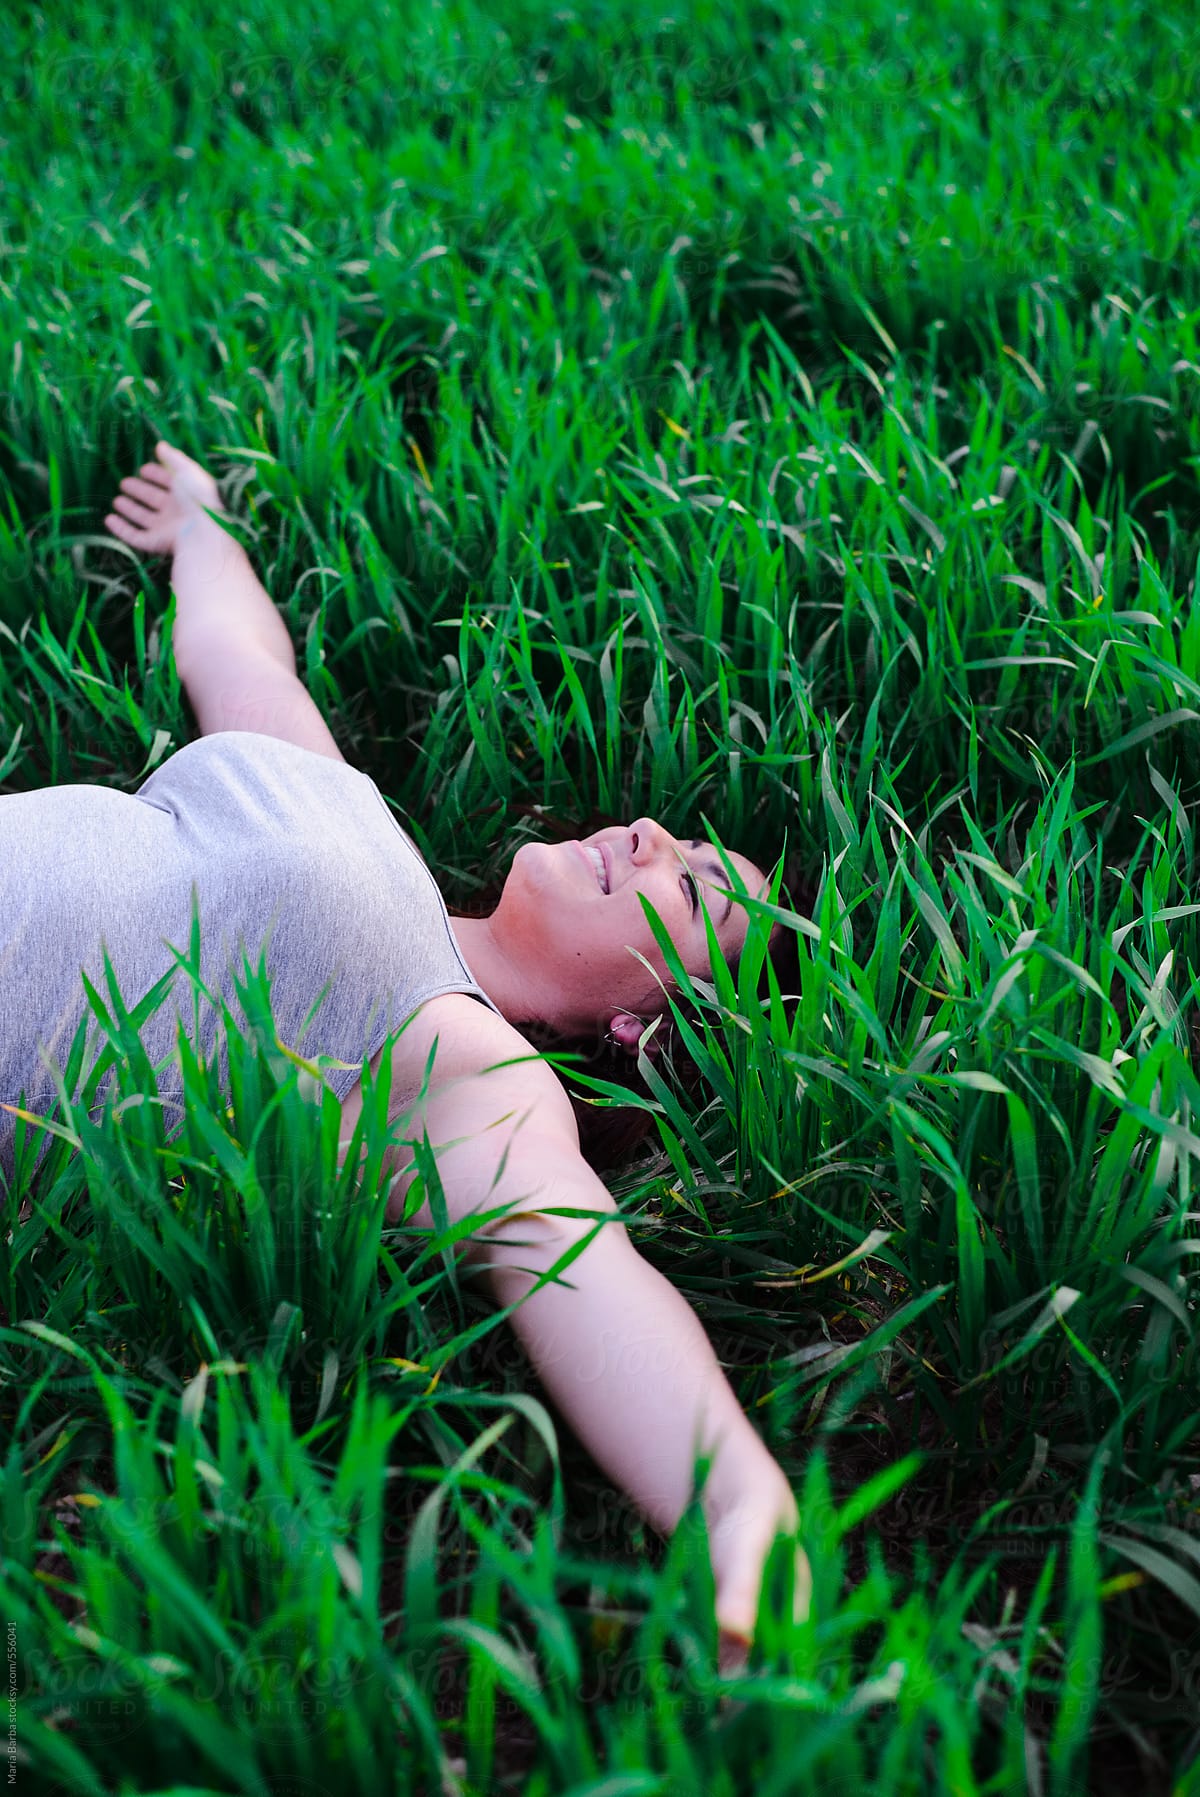 Natural Spanish Woman Lying On The Grass By Stocksy Contributor María Barba Stocksy